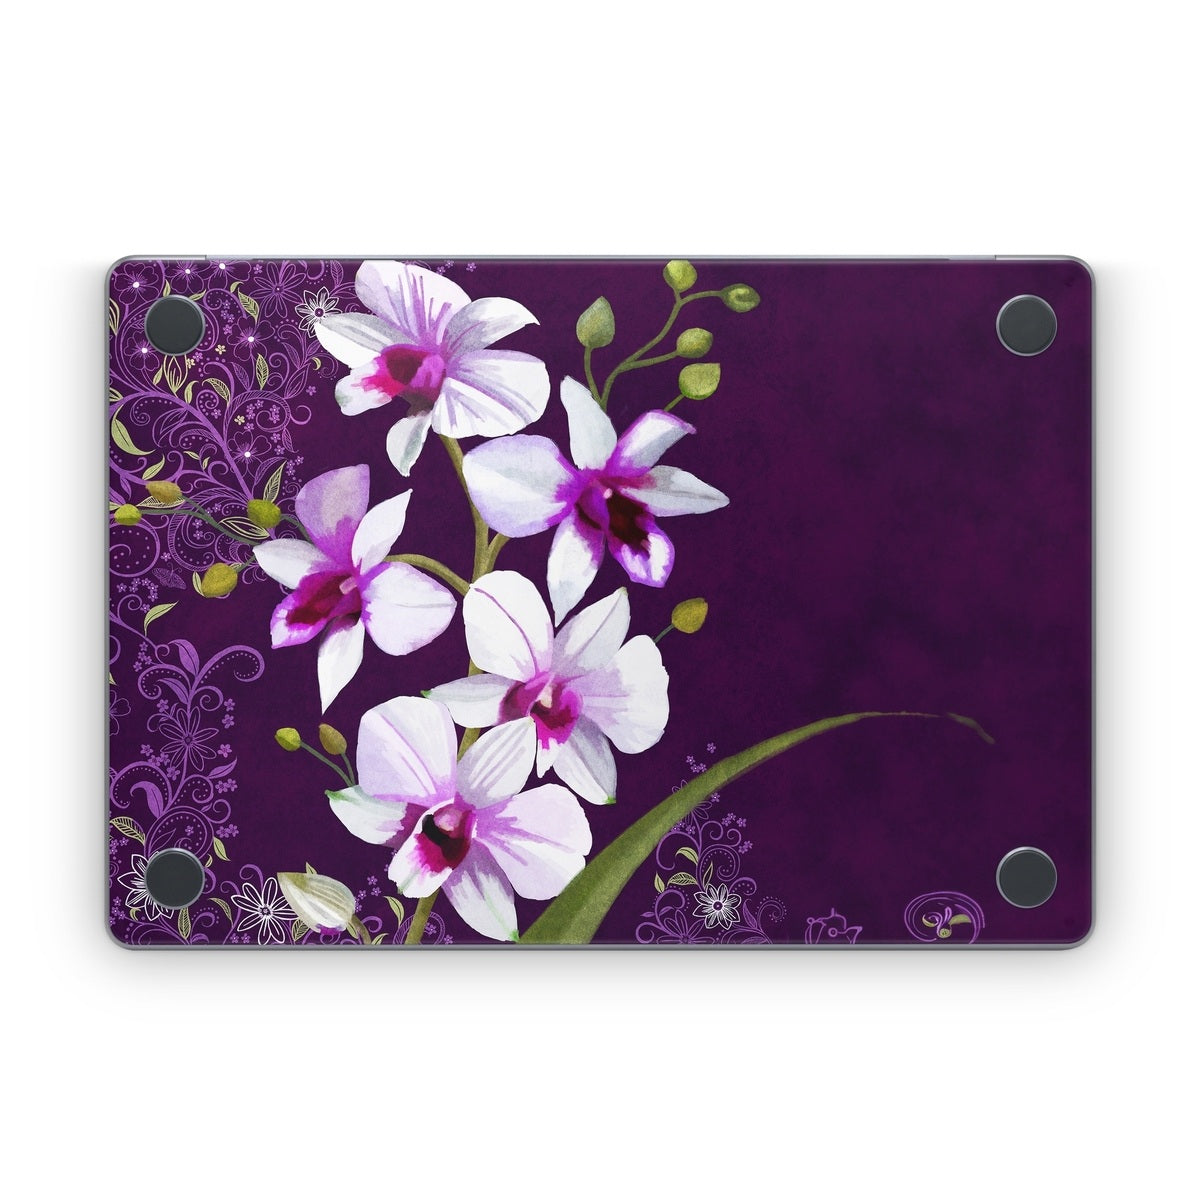 Violet Worlds - Apple MacBook Skin